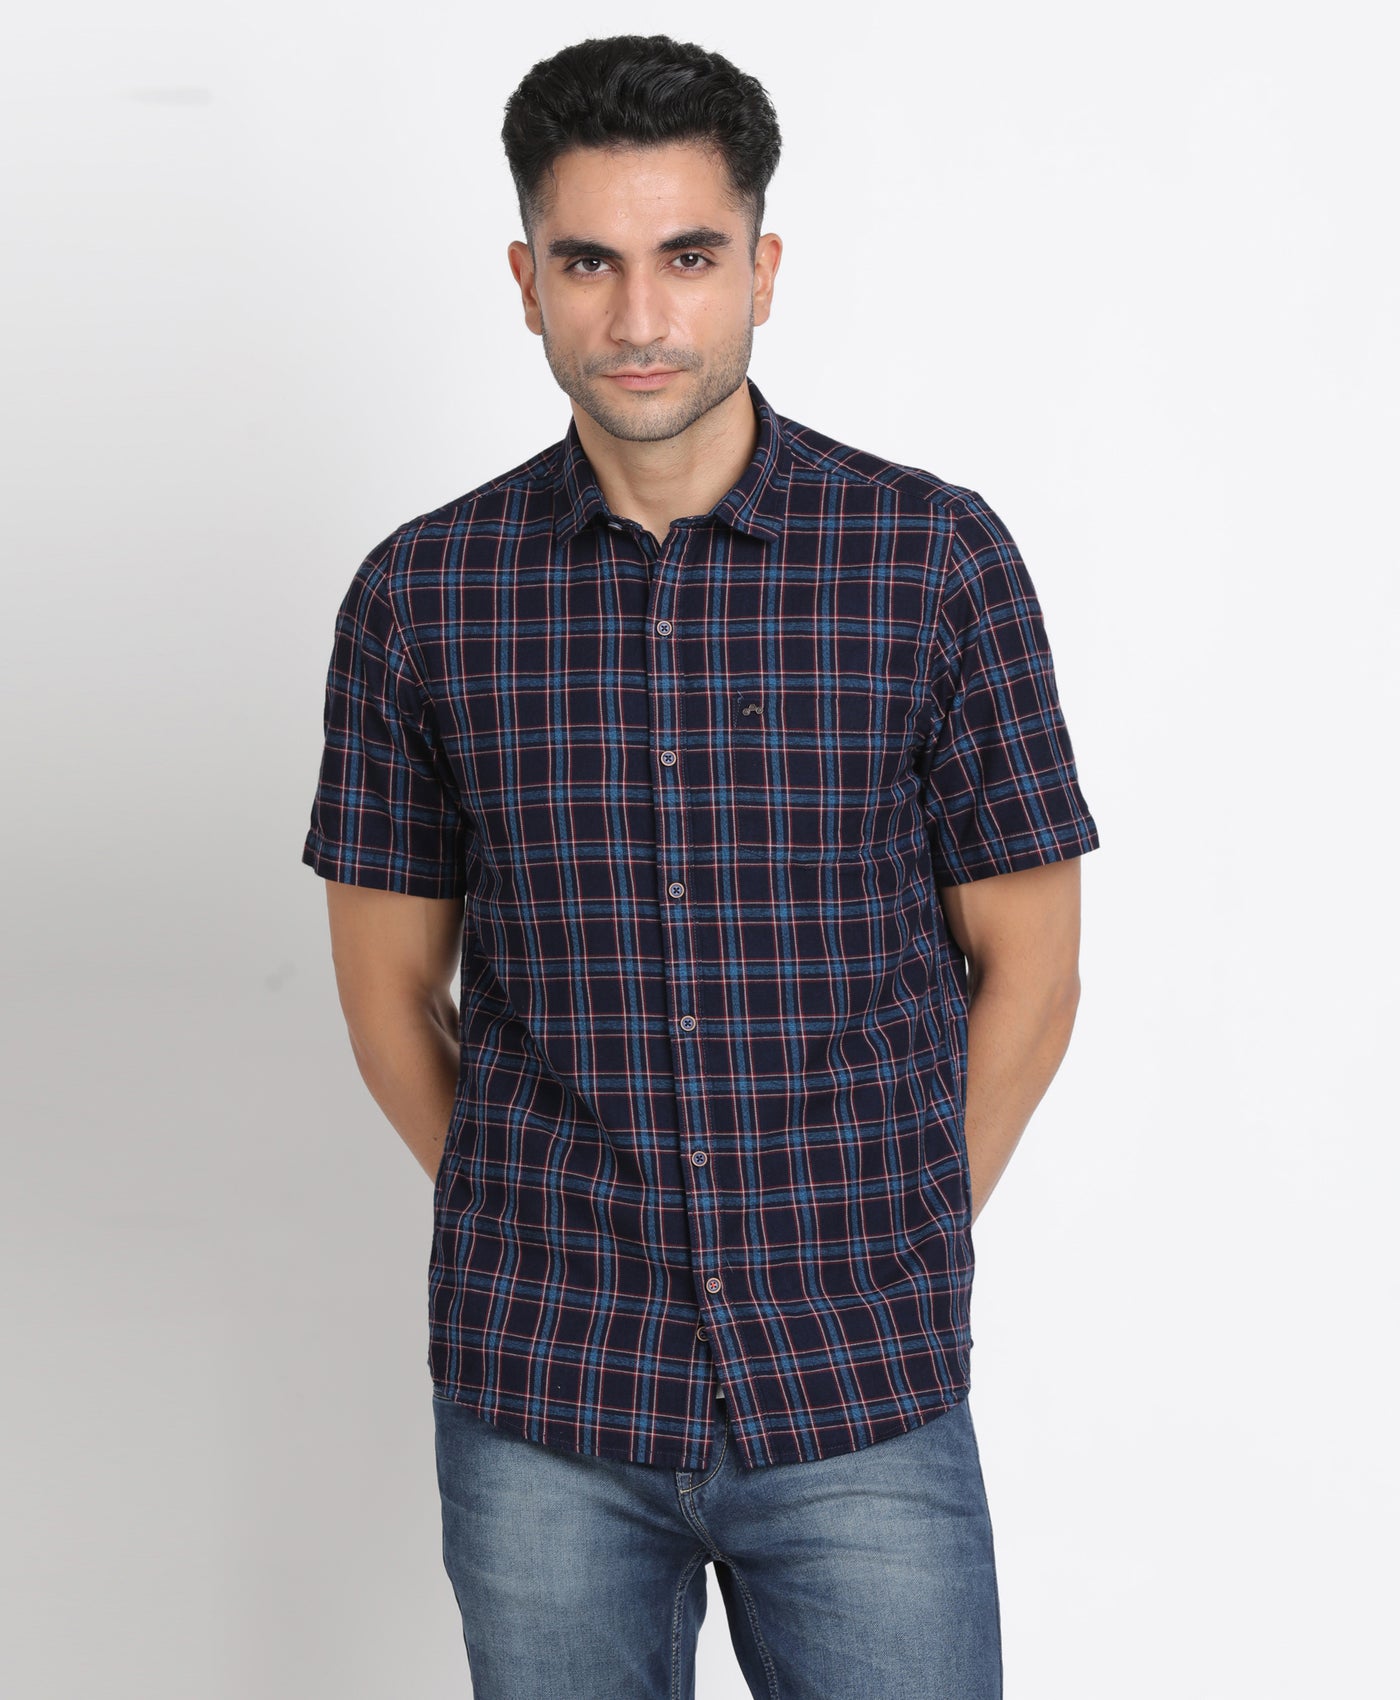 100% Cotton Indigo Navy Blue Checkered Slim Fit Half Sleeve Casual Shirt